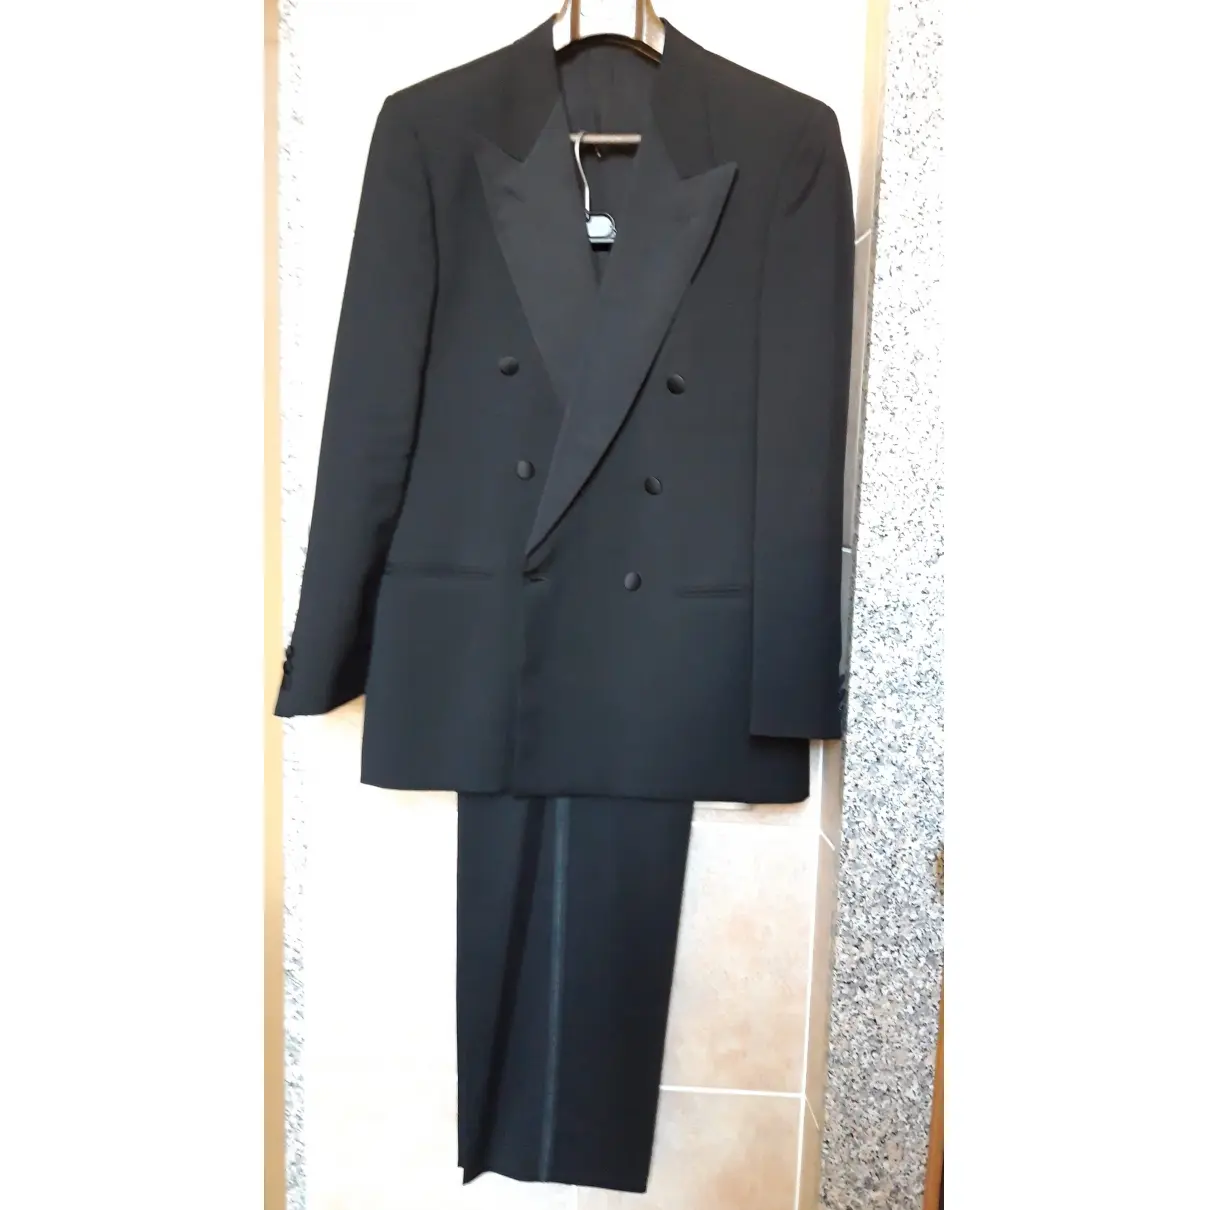 Emanuel Ungaro Wool suit for sale - Vintage